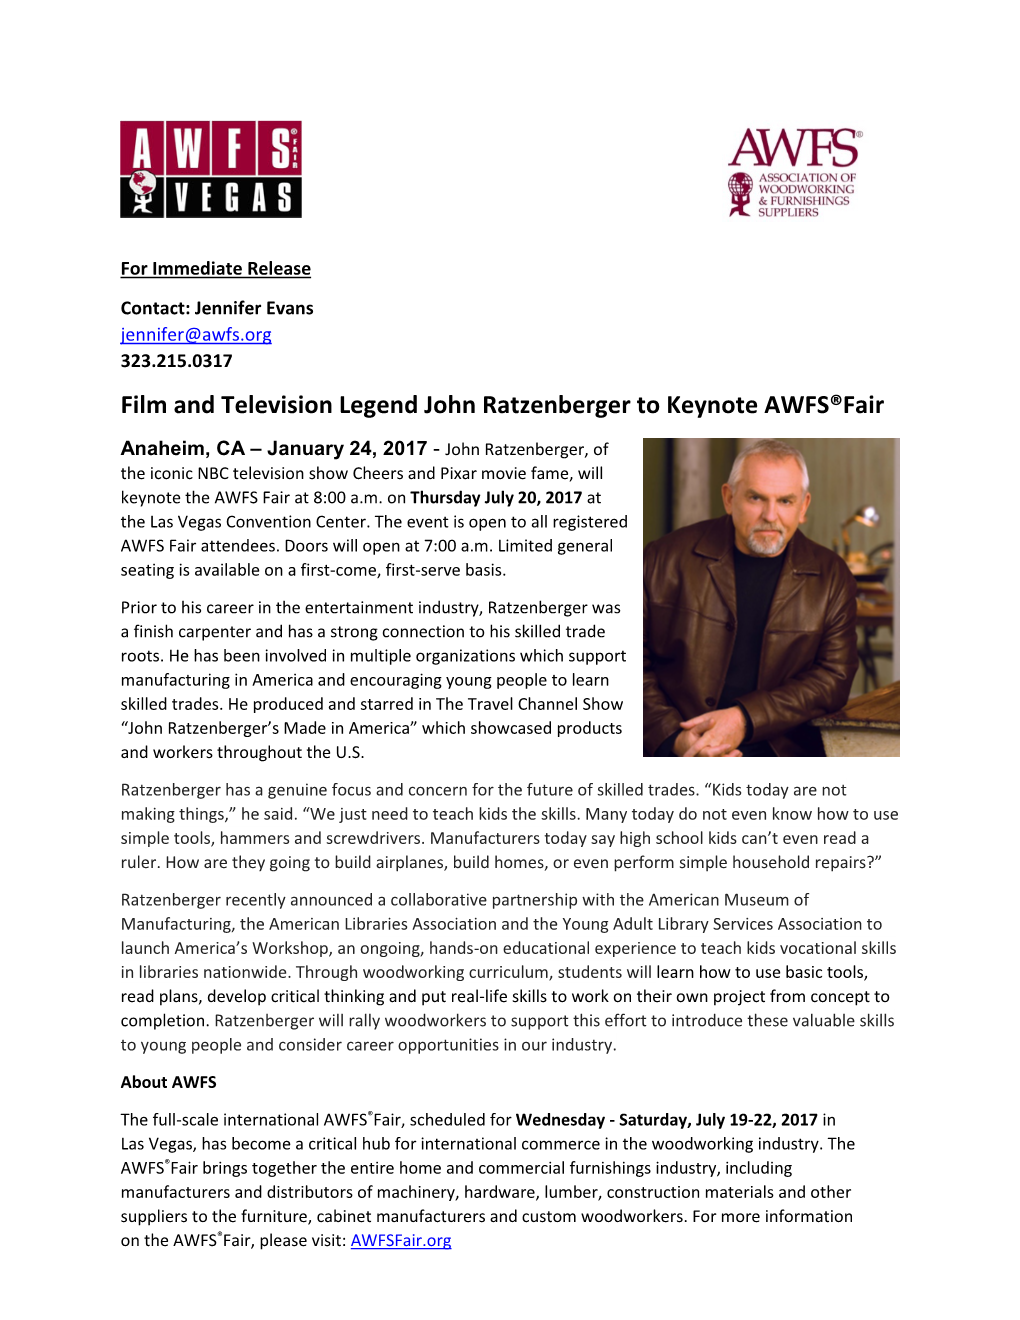 Film and Television Legend John Ratzenberger to Keynote AWFS®Fair